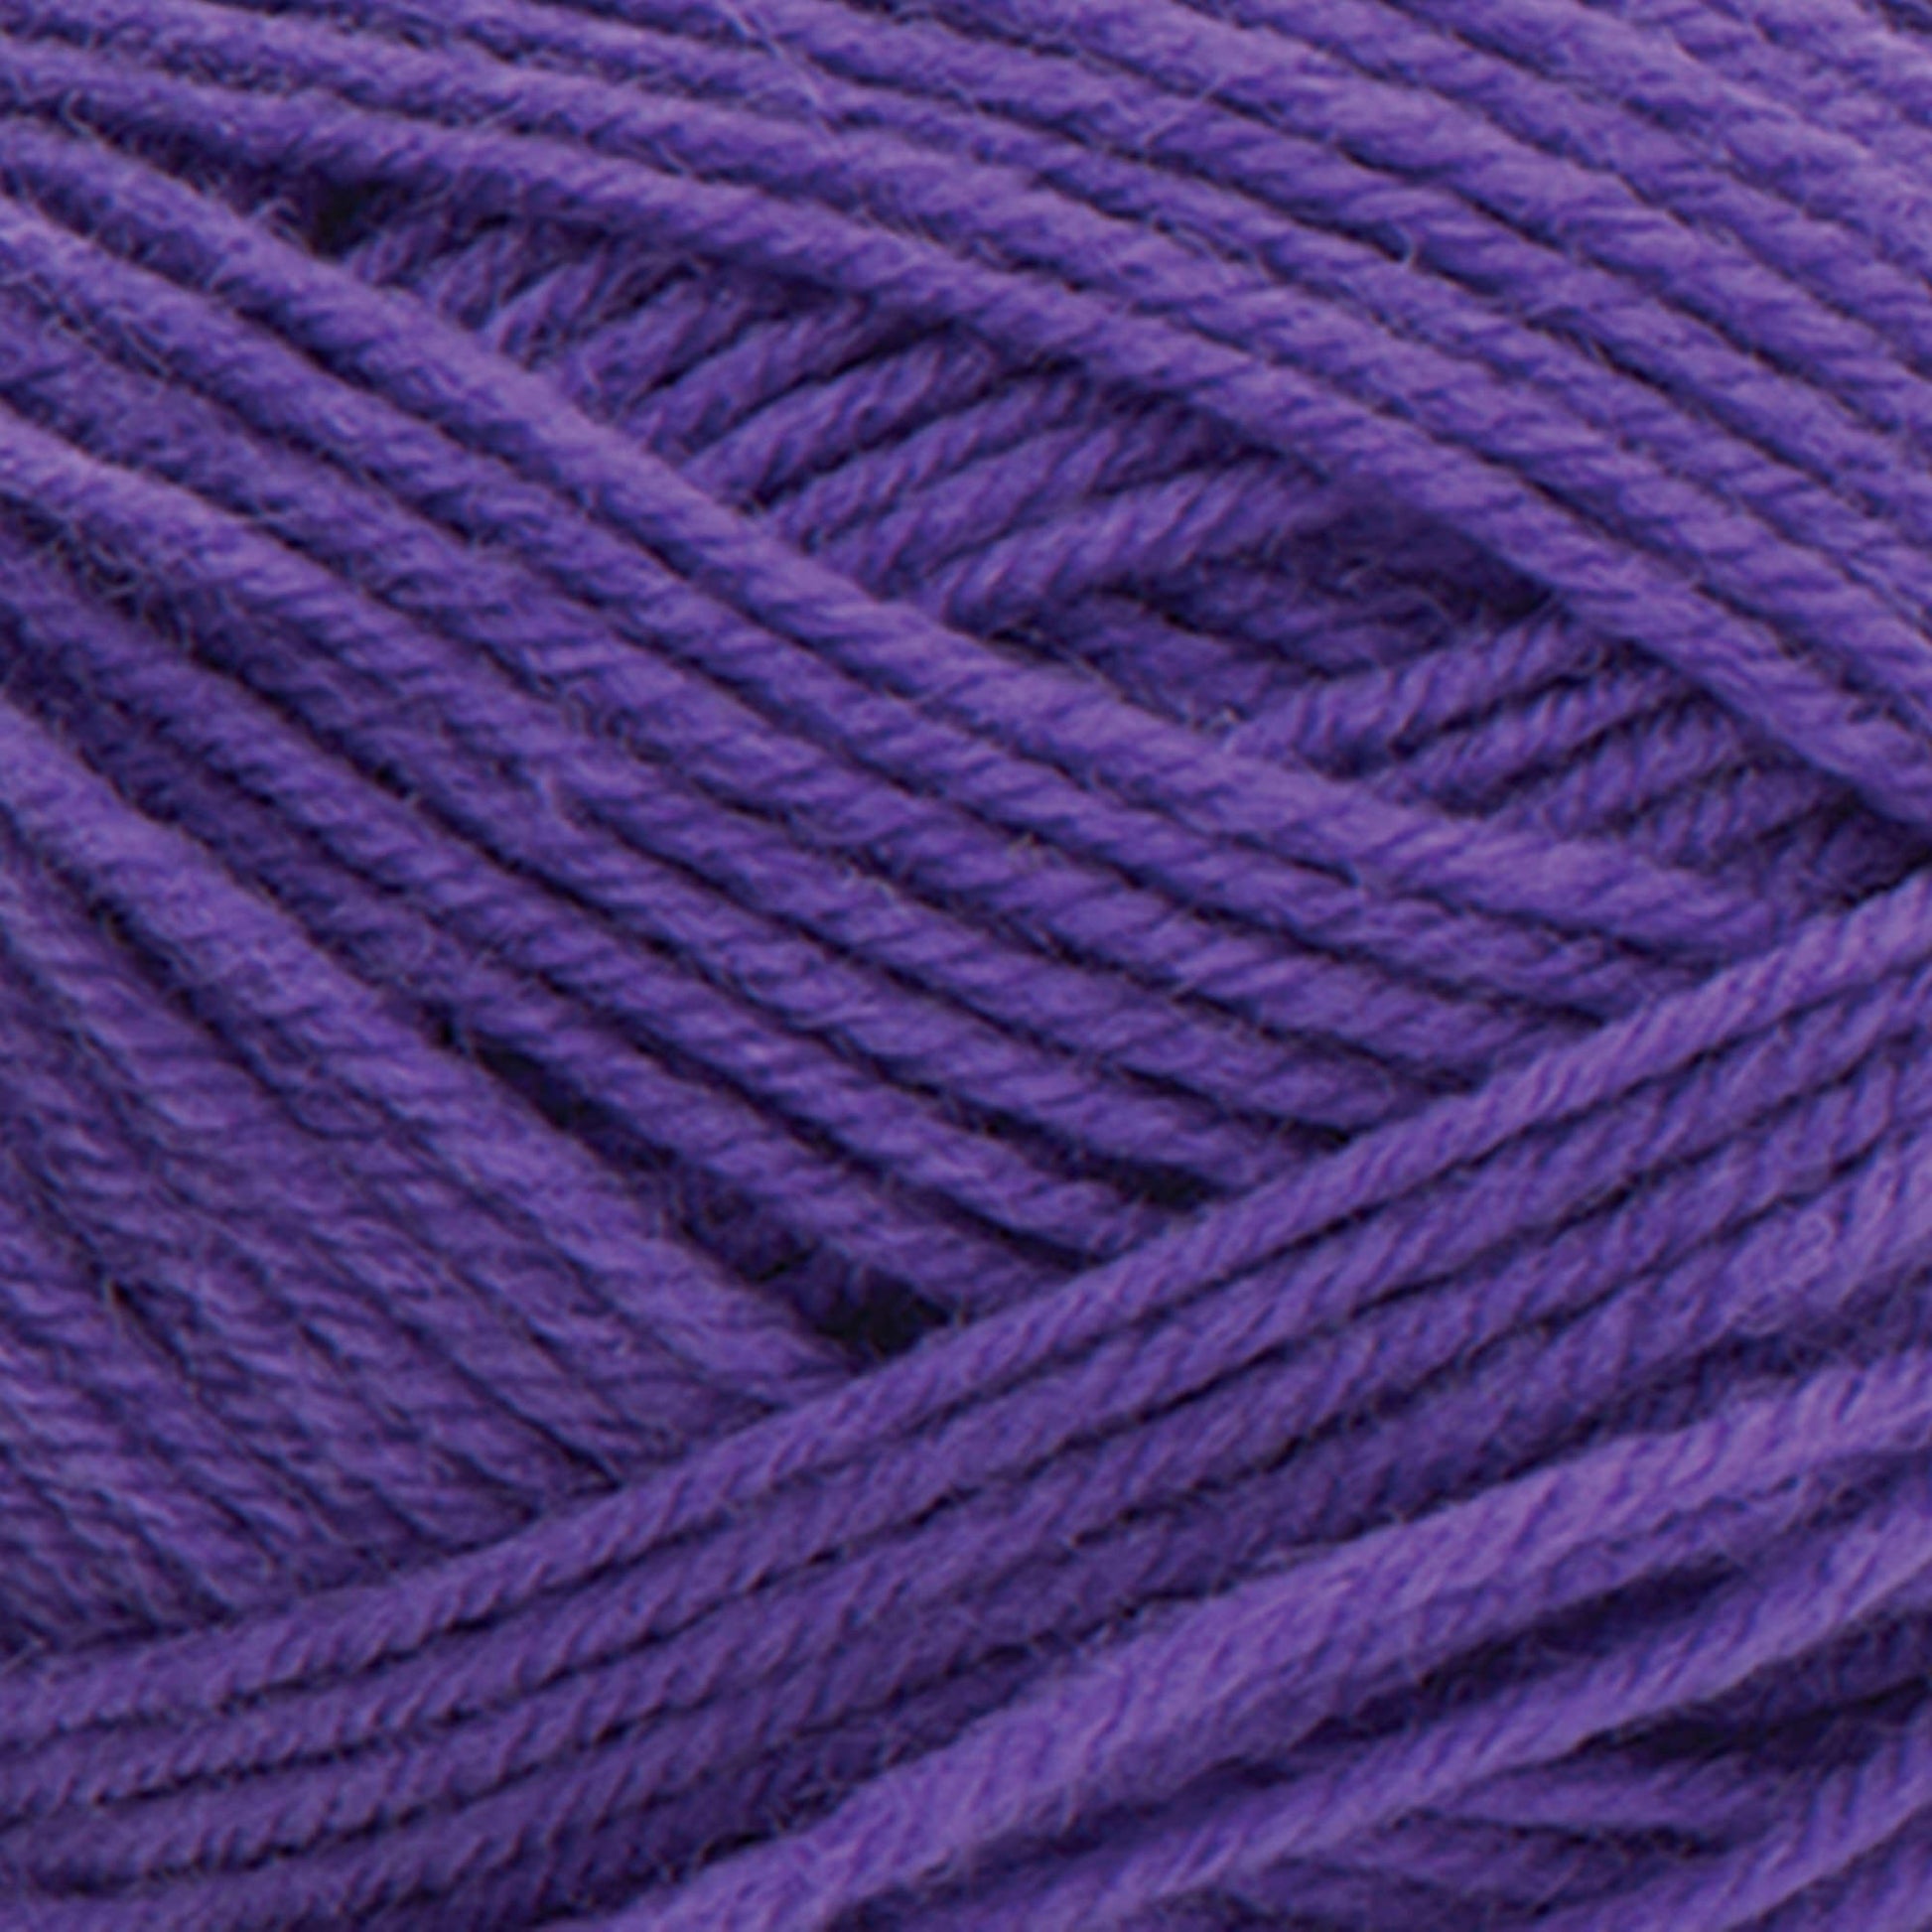 Caron Kindness Yarn - Discontinued Shades Purple